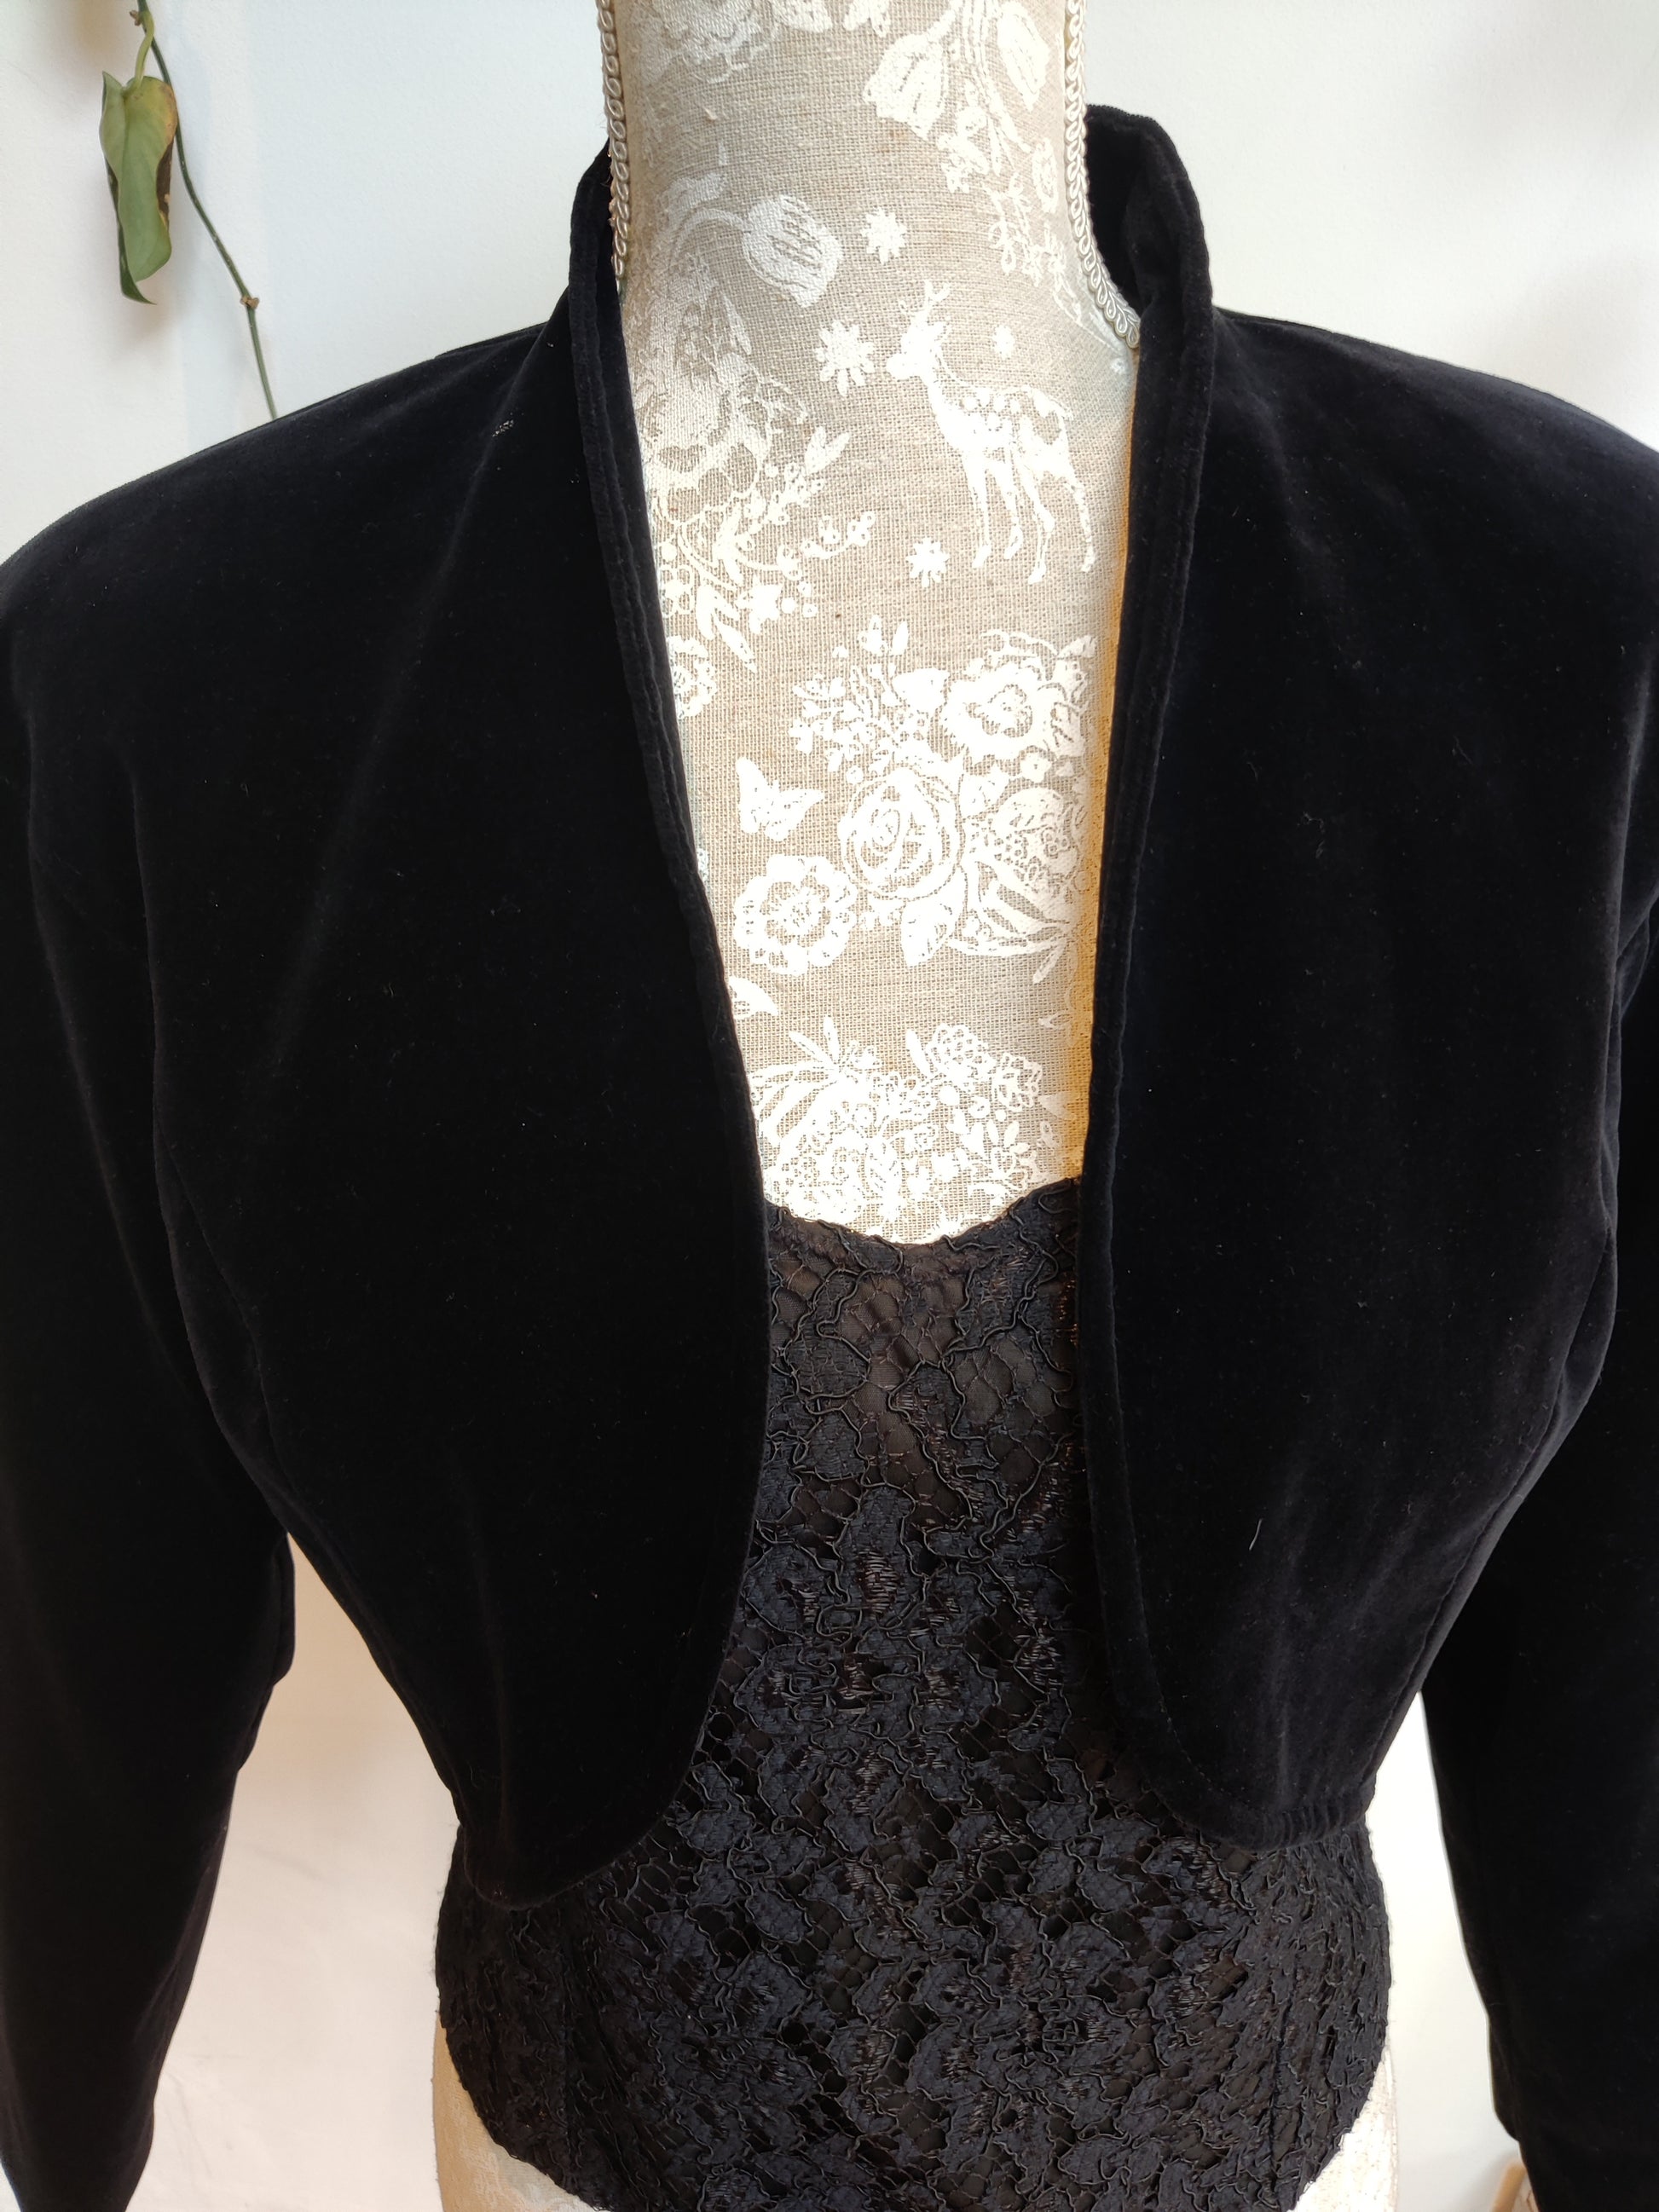 Stunning black velvet bolero with lace top